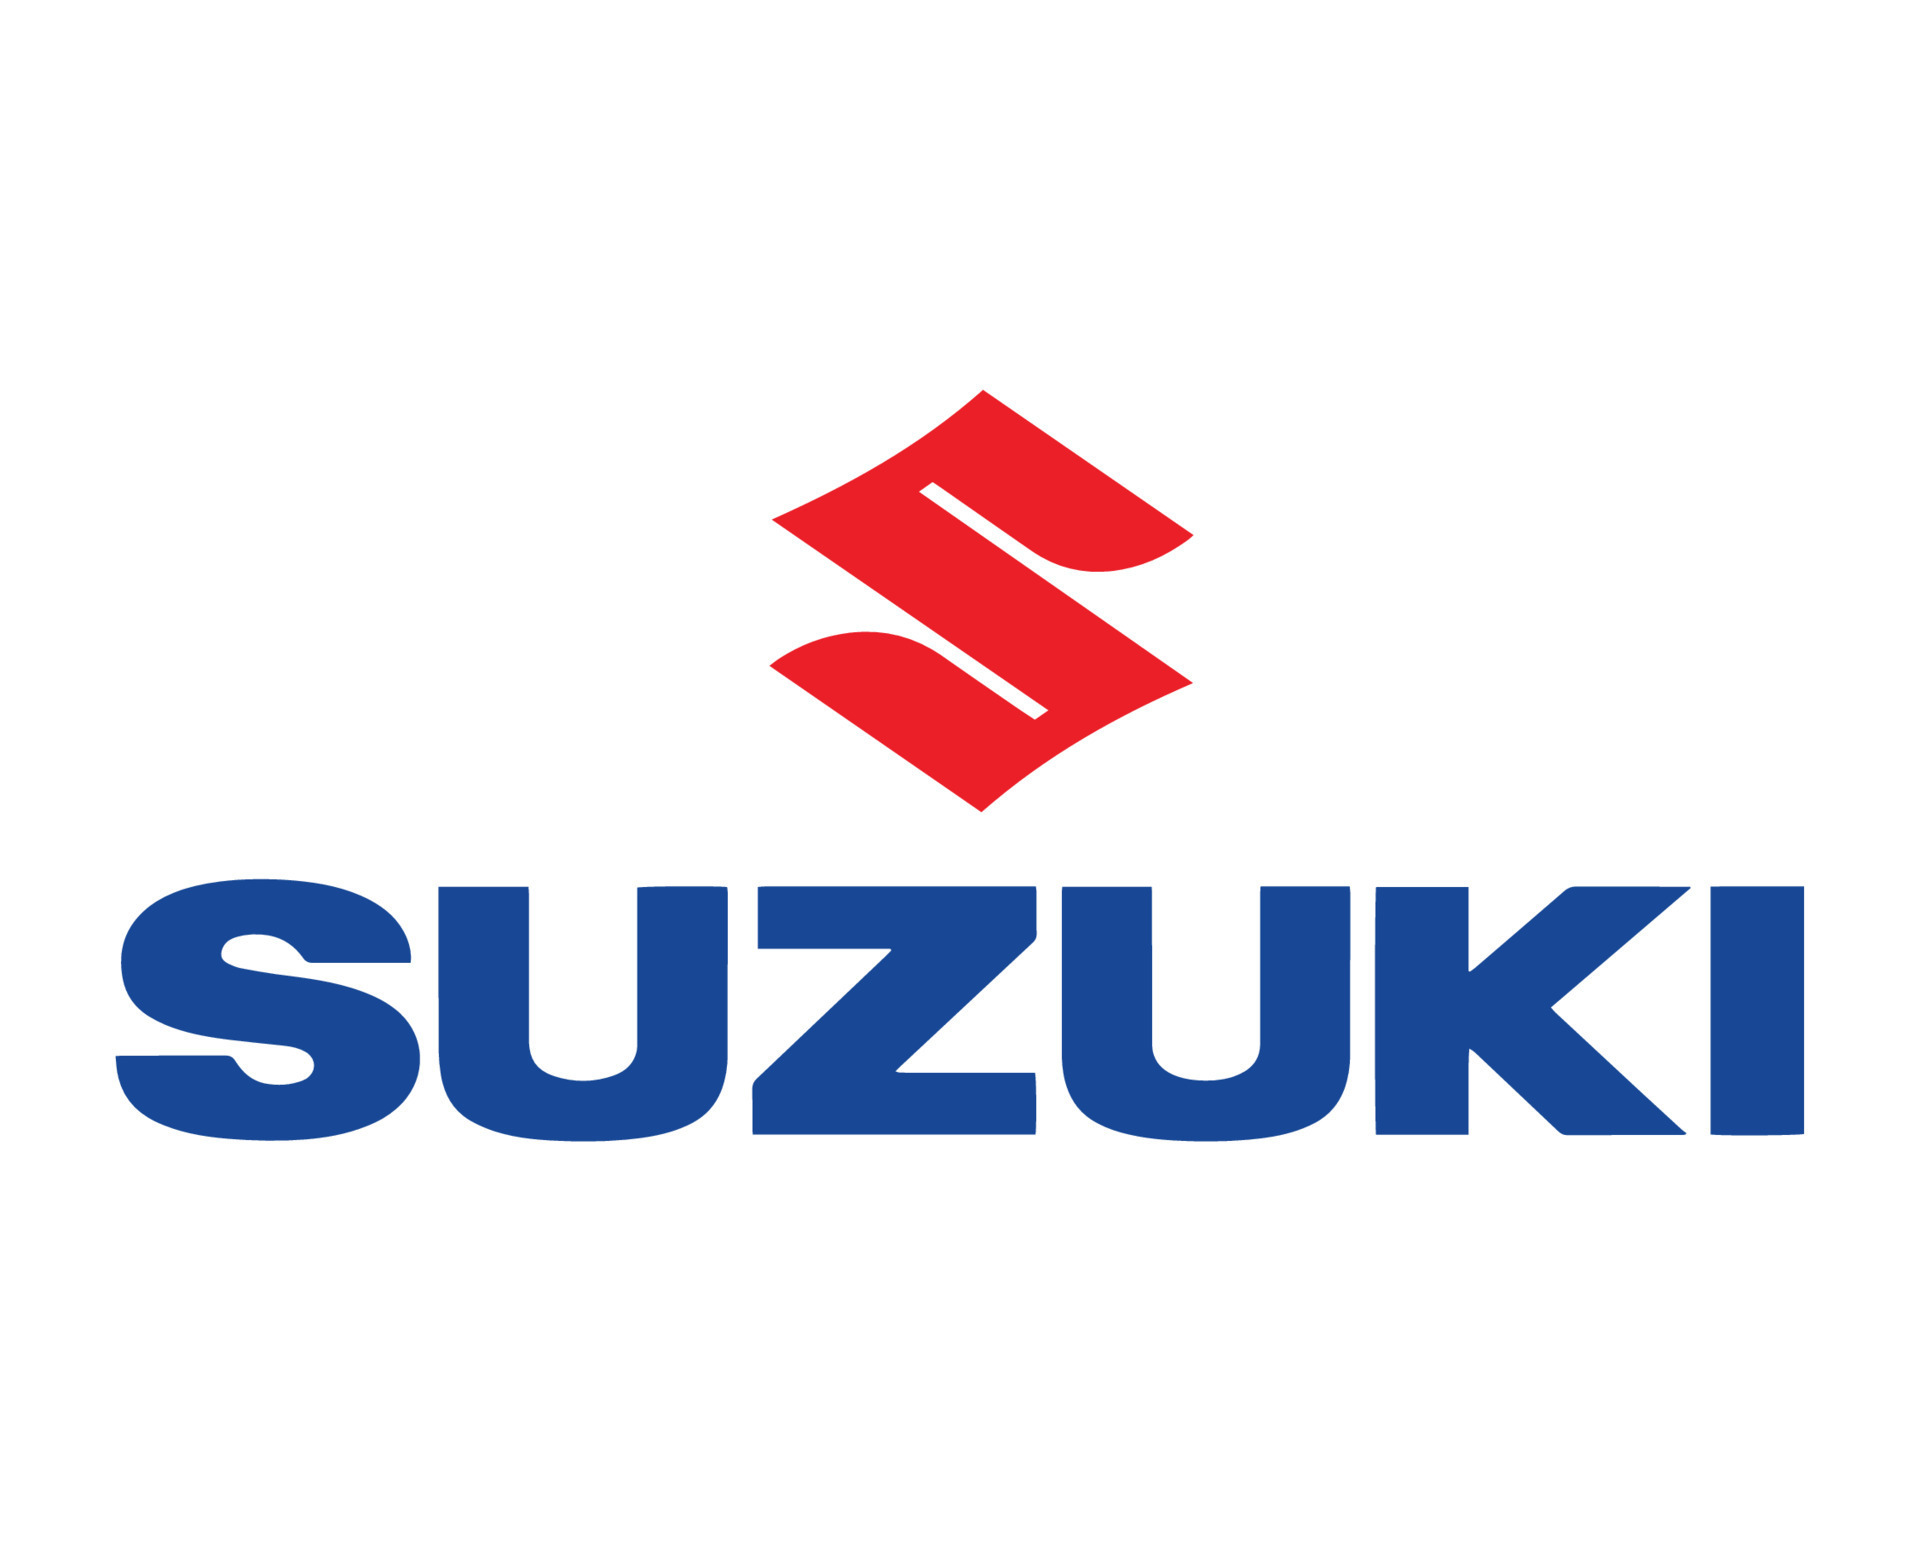 Suzuki Logo Brand Car Symbol Red With Name Blue Design Japan Automobile  Vector Illustration 20927712 Vector Art at Vecteezy